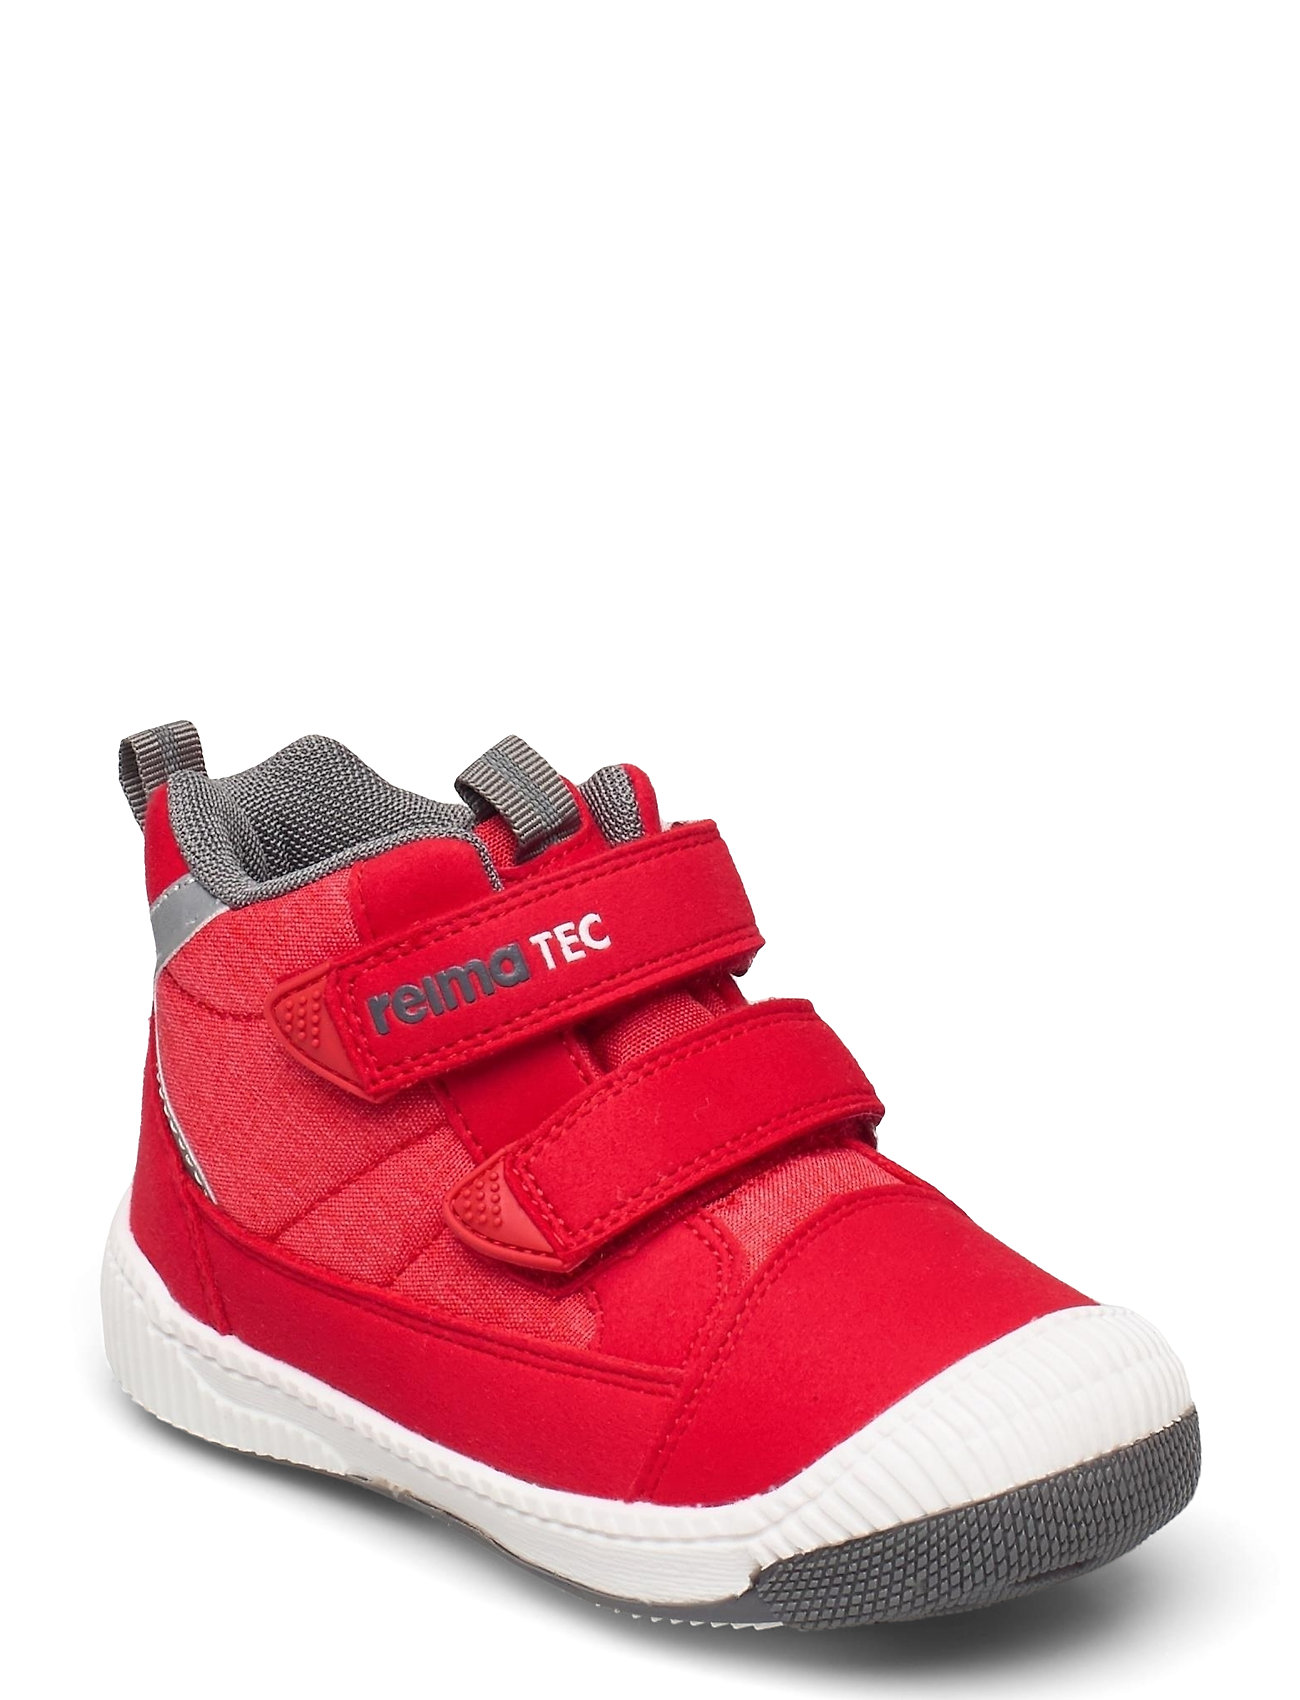 Grå Passo Walkers Beginner Shoes Rød Reima sko for børn - Pashion.dk